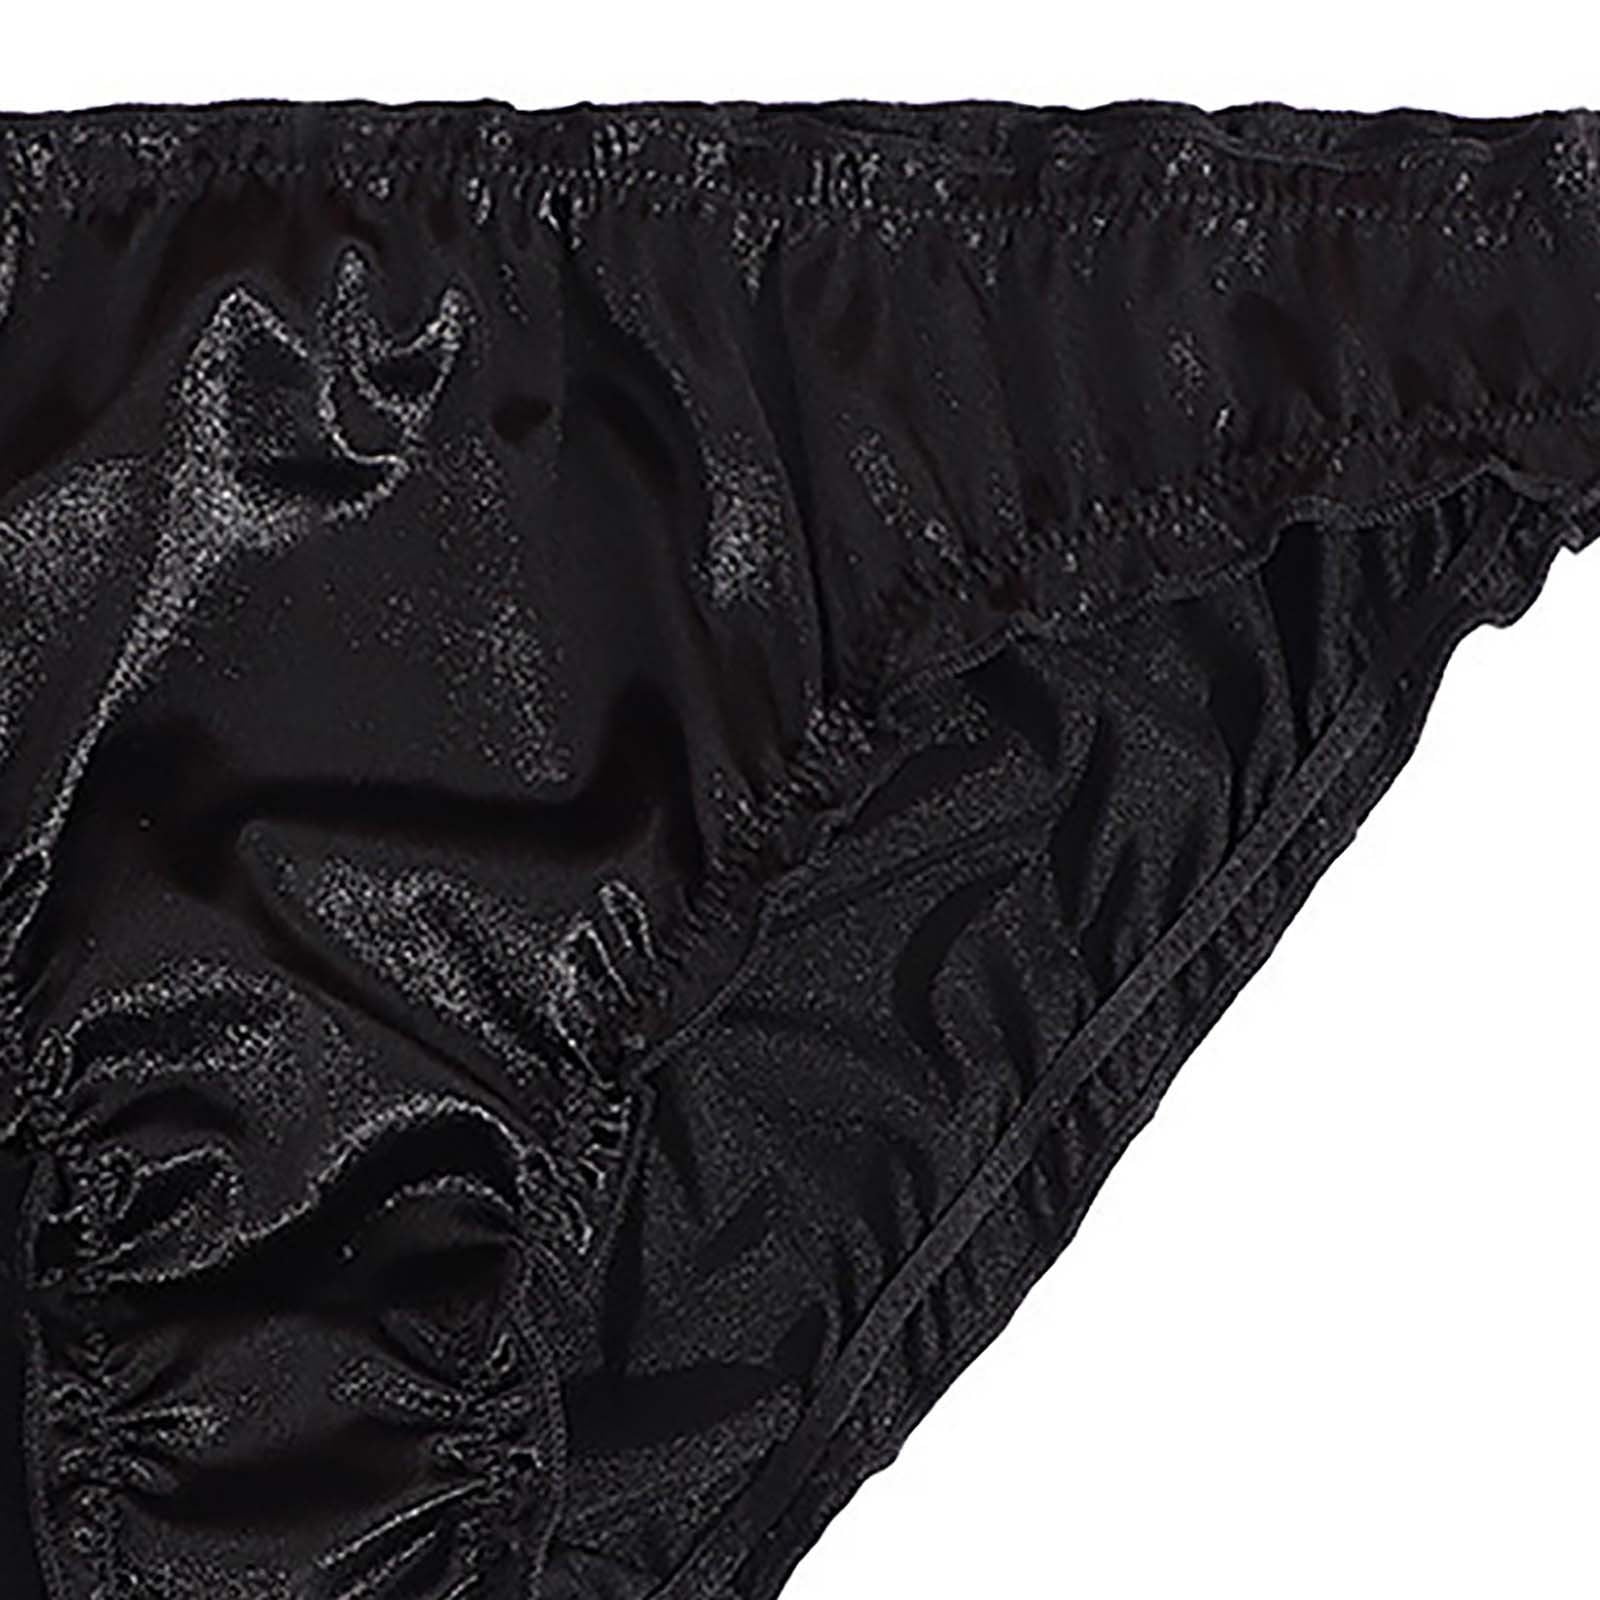 AOOCHASLIY Womens Underwear Plus Size Deals Brief Thong Satin Panties Mid  Waist Wavy Cotton Crotch Briefs 